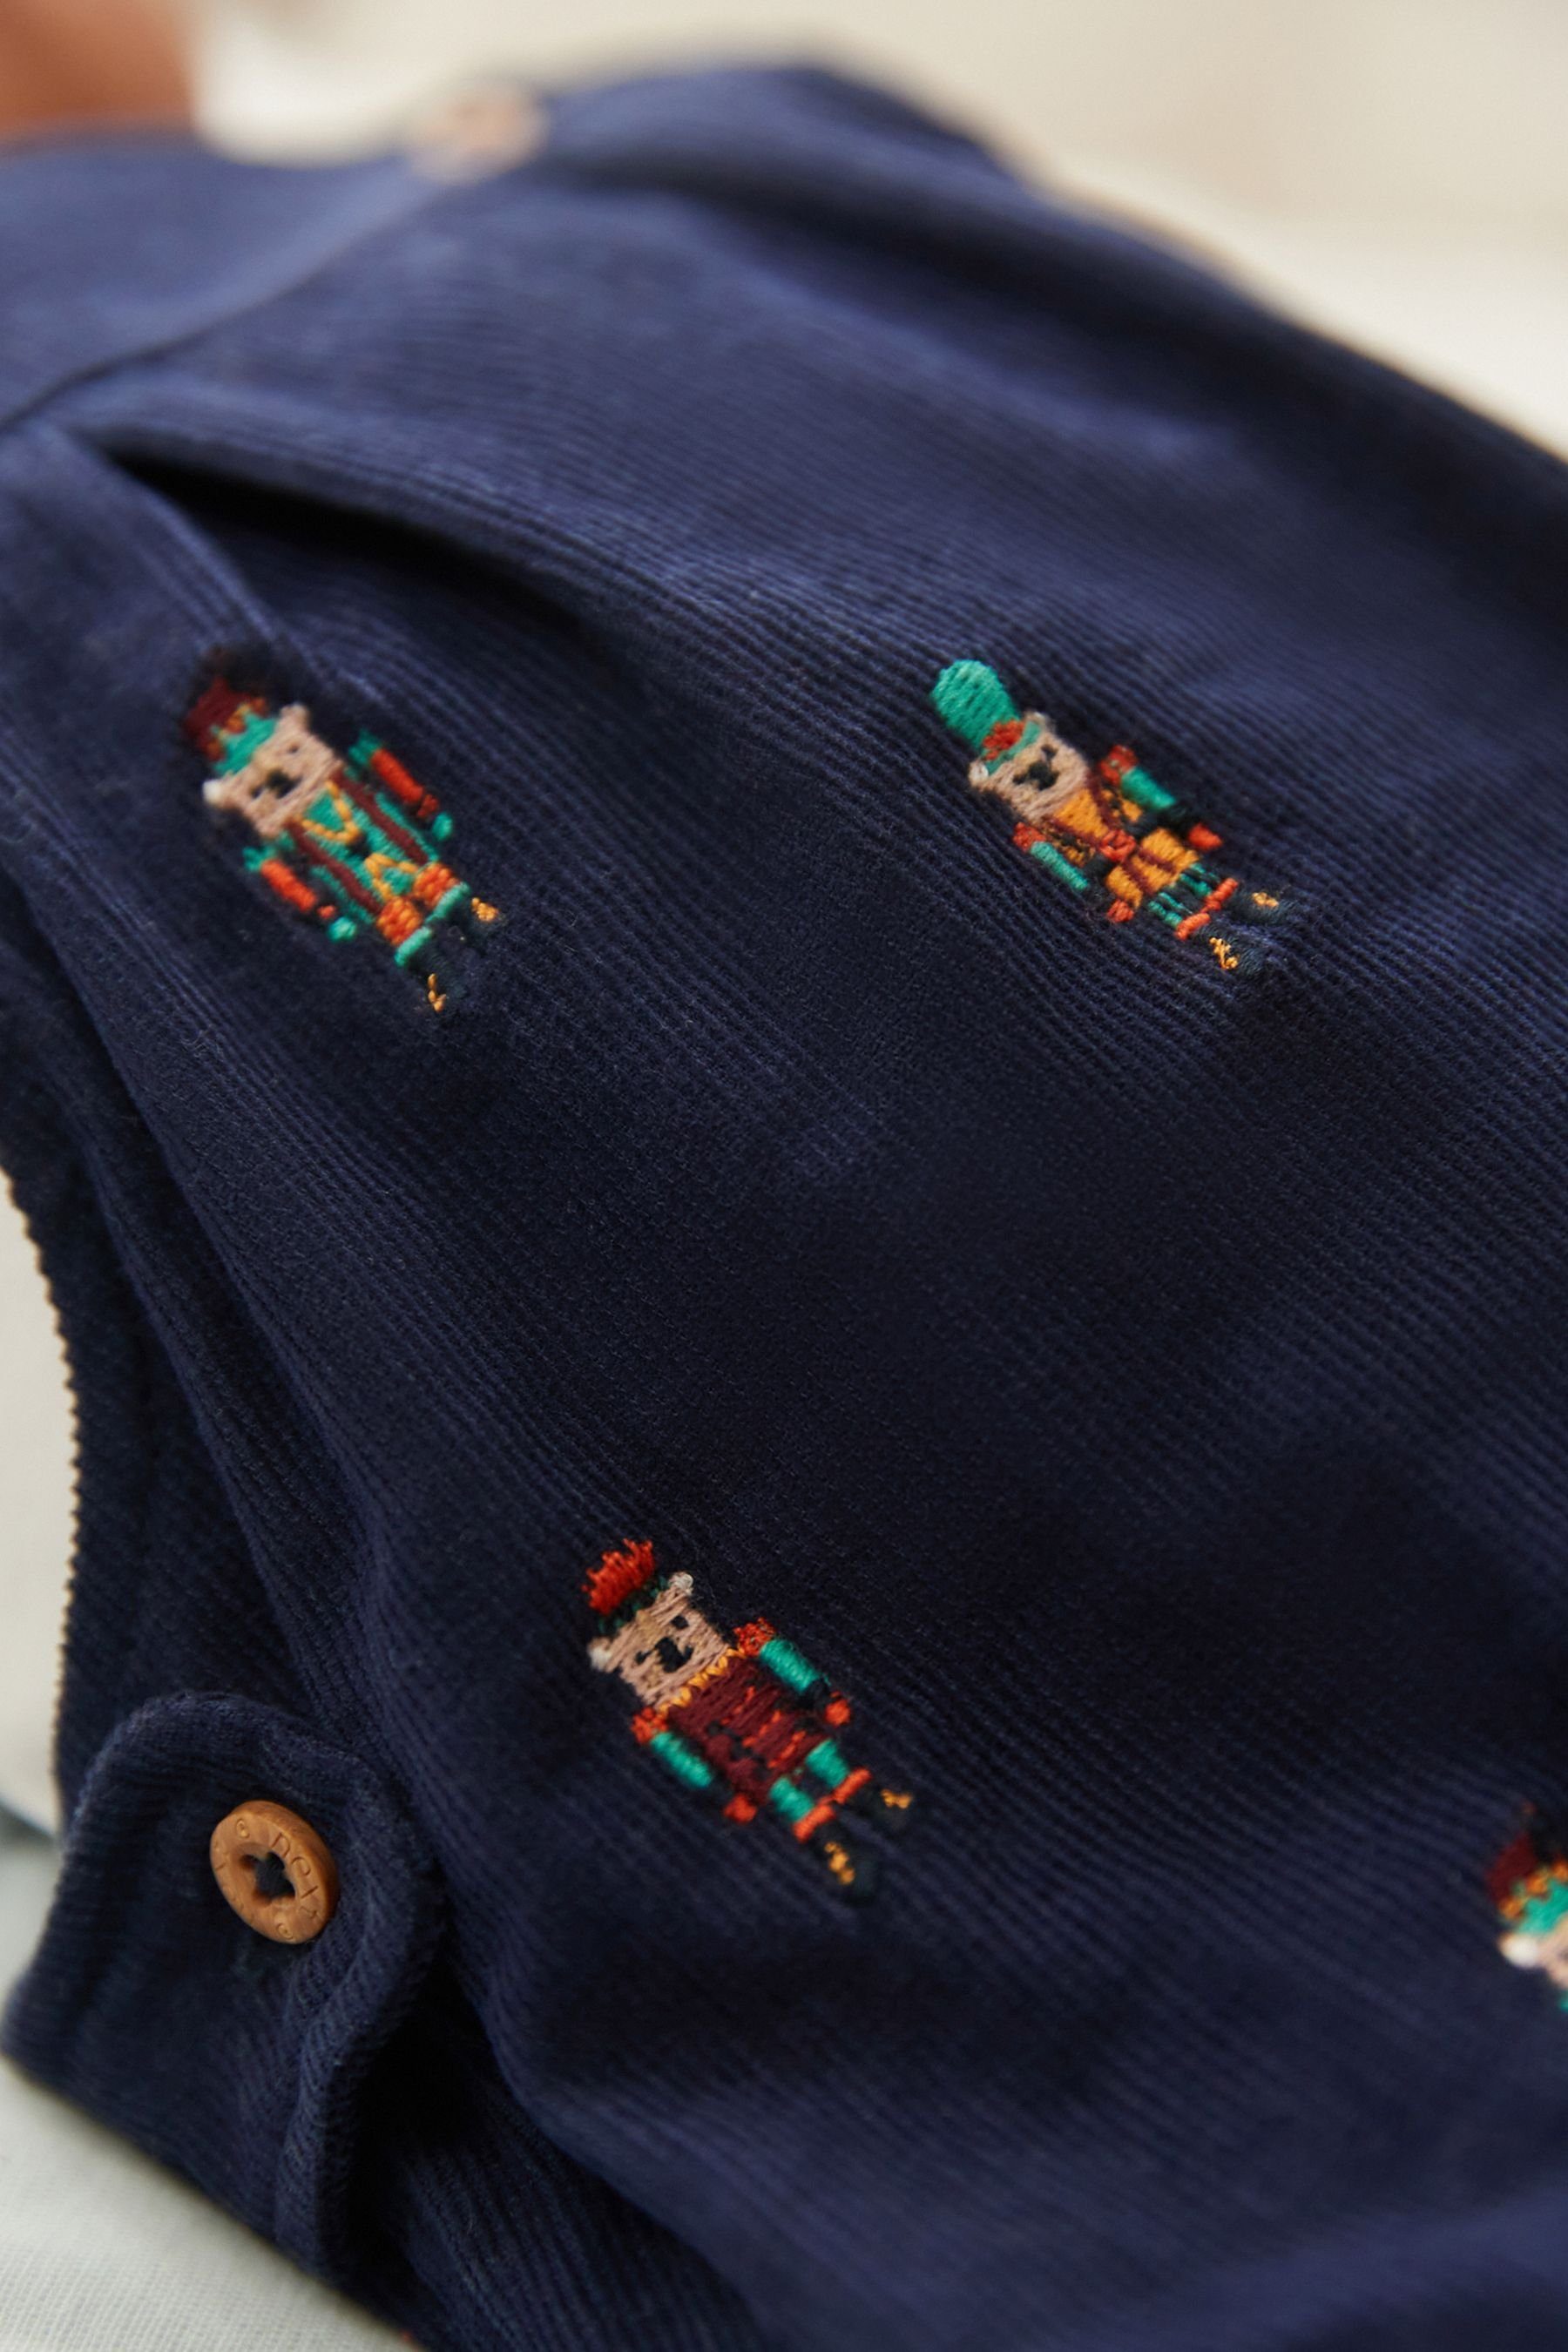 Next Latzhose Baby-Latzhose und Body Set Embroidery Schicke (2-tlg) Navy Bear 2-teiligen im